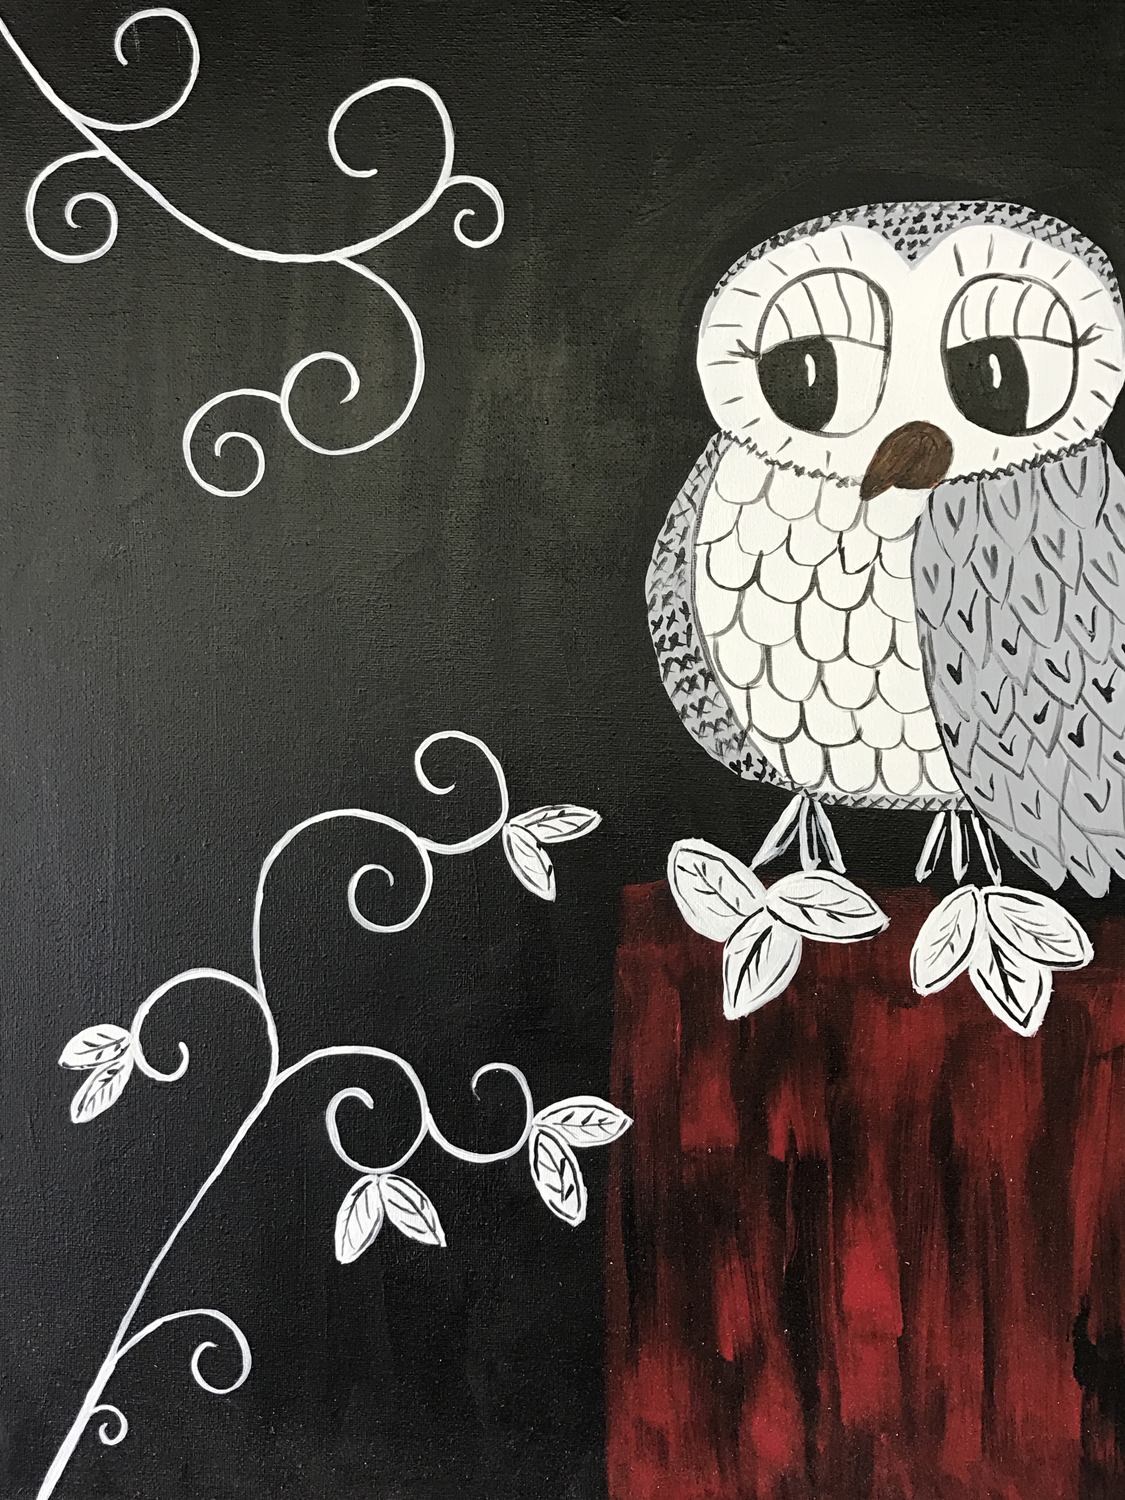 
        
            Upcoming
        In Studio – Grey Owl